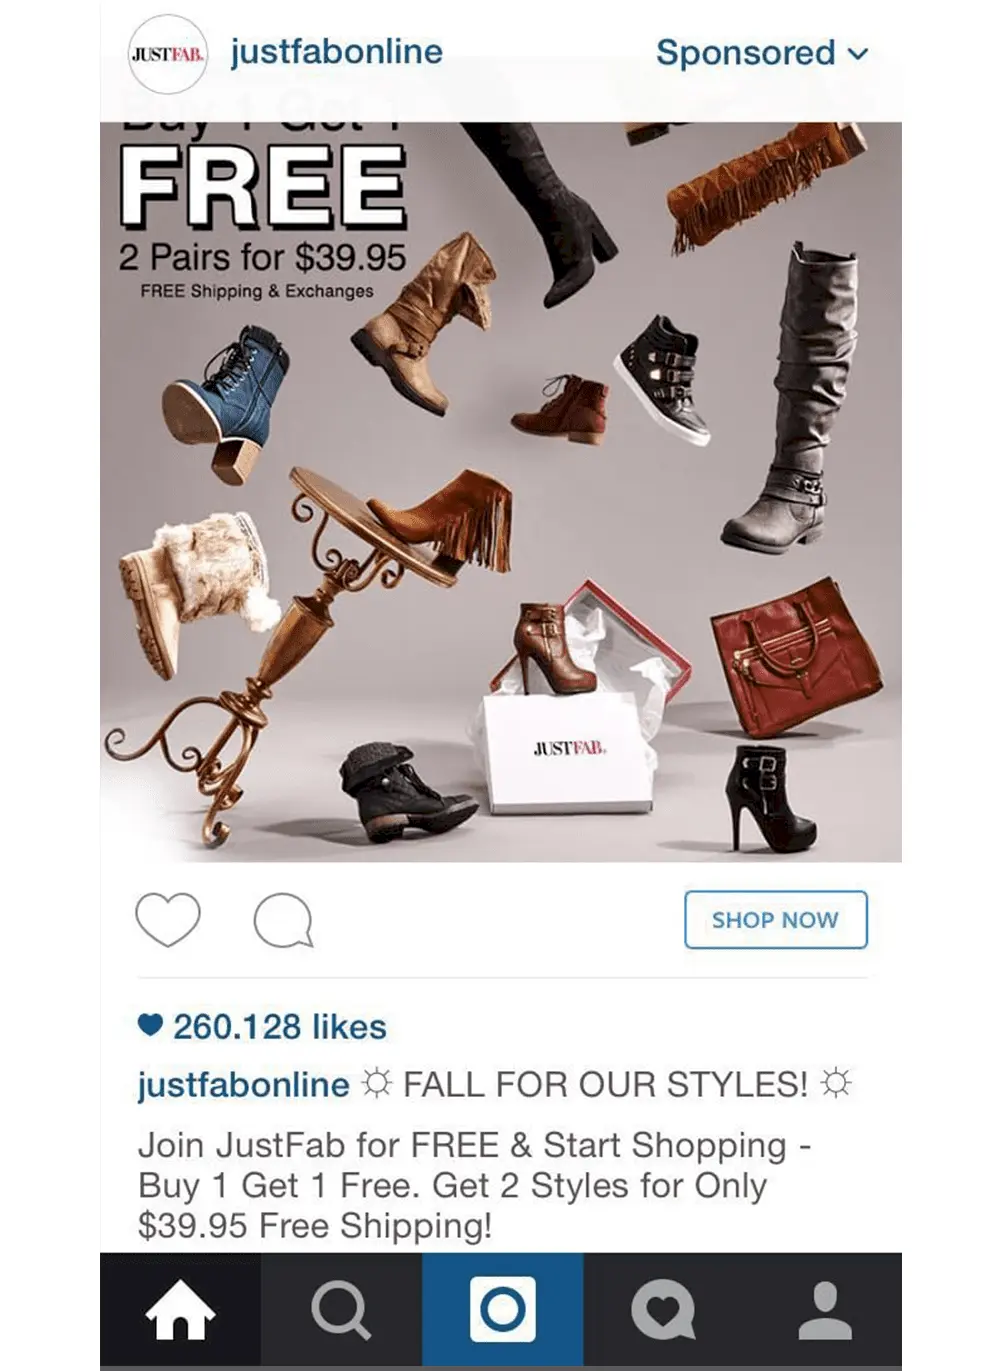 instagram reklam örneği